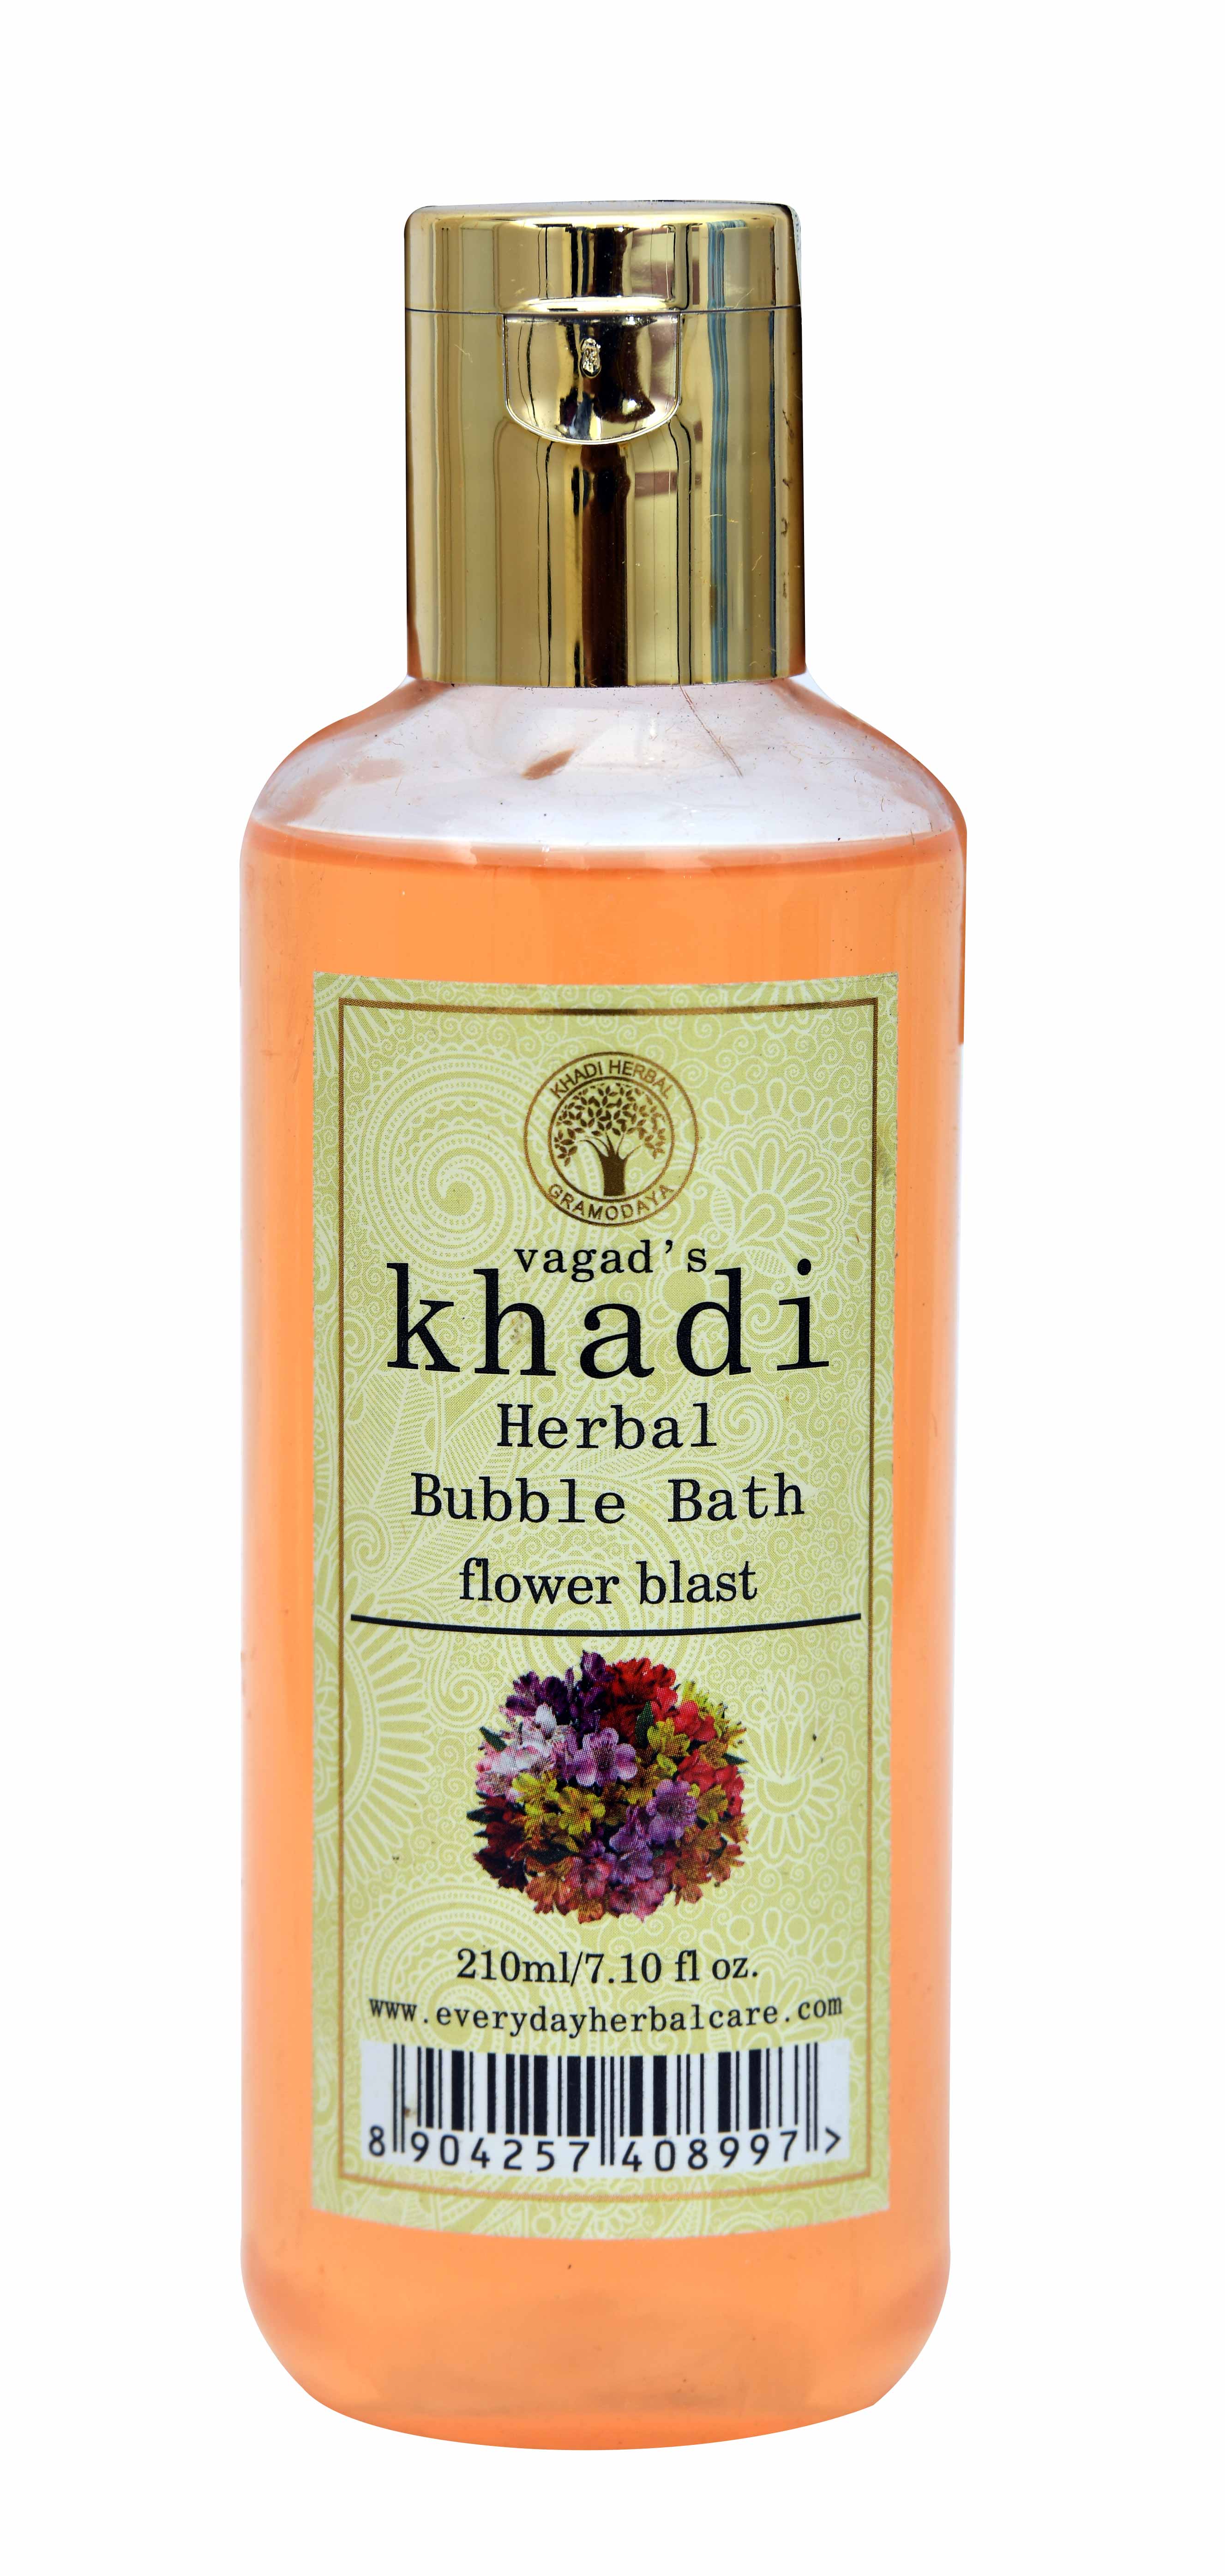 Buy Vagad's Khadi Flower Blast Bubble Bath at Best Price Online